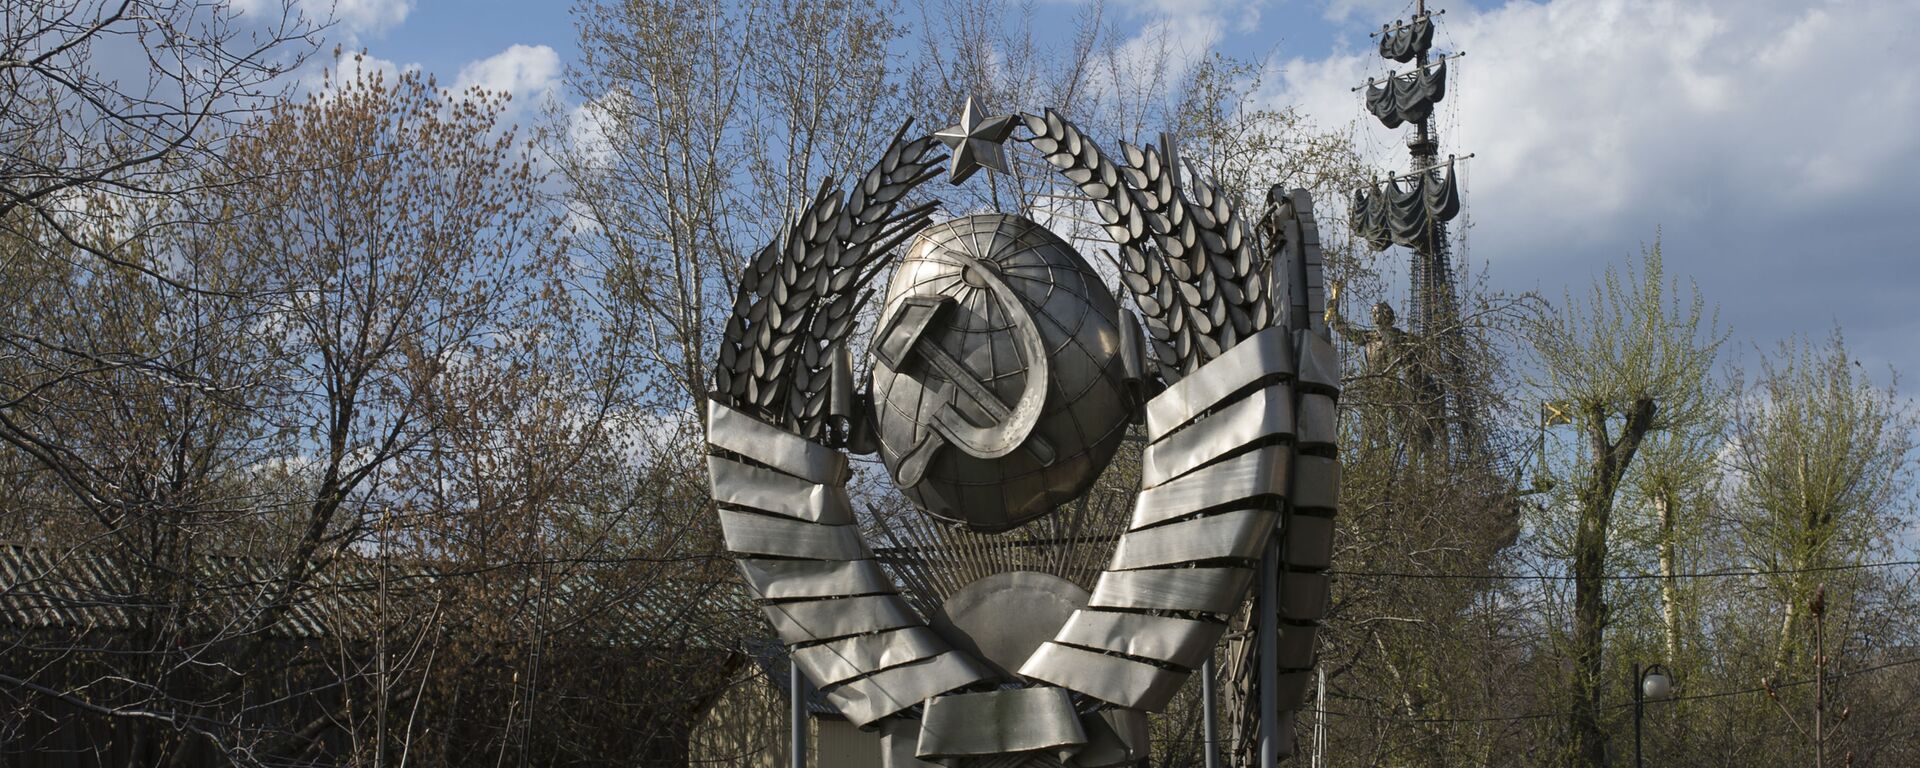 Grb SSSR-a u Parku umetnosti u Moskvi - Sputnik Srbija, 1920, 11.12.2021